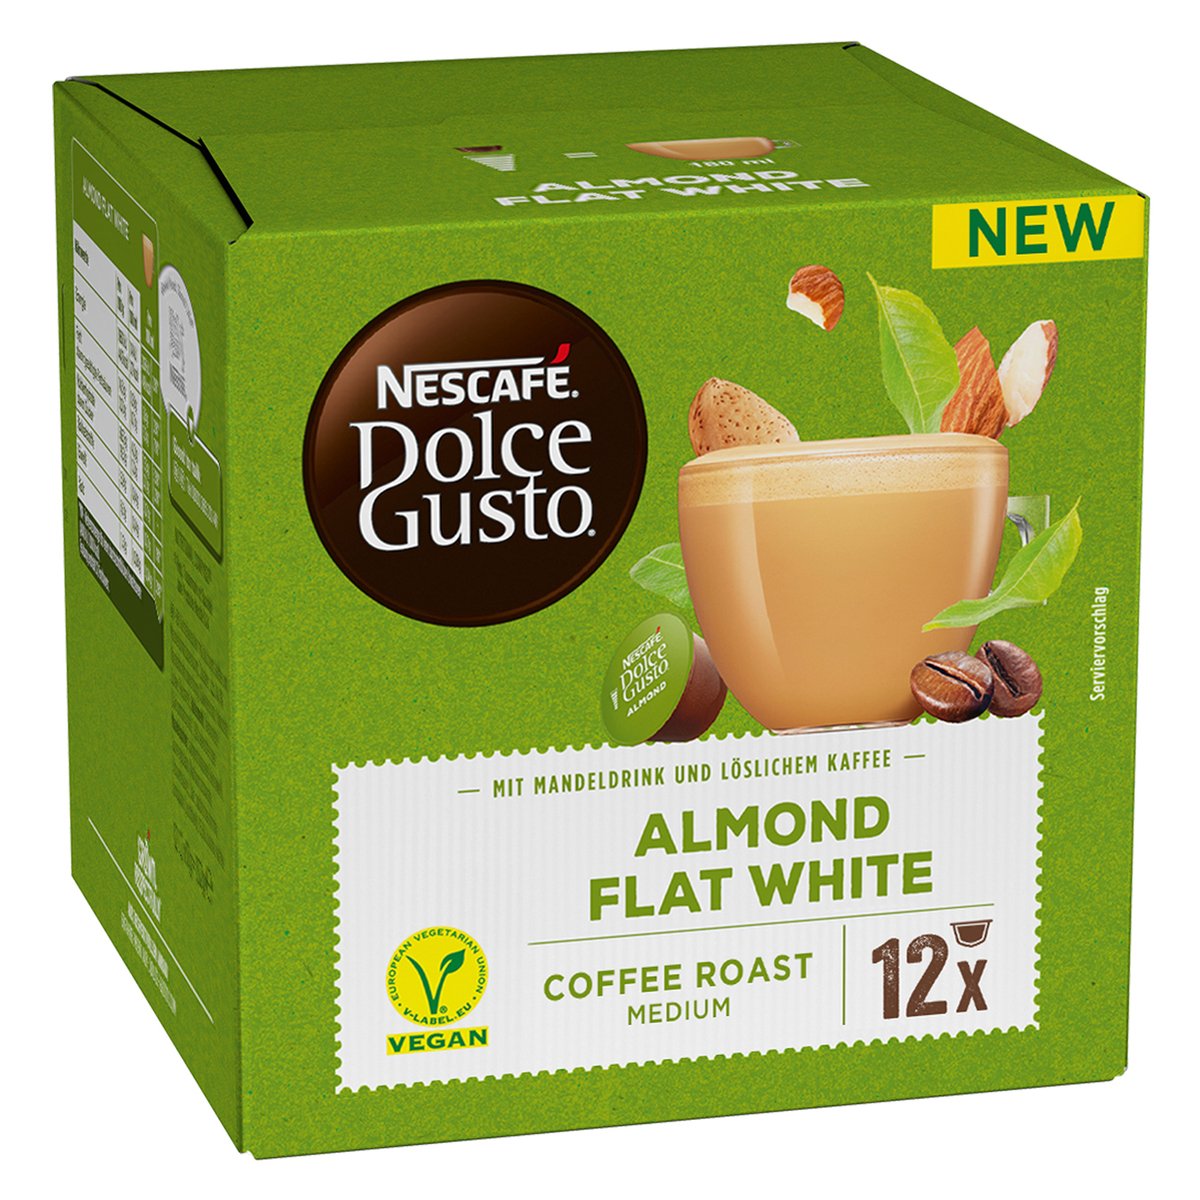 Nescafe Dolce Gusto Almond Flat White 12 pcs